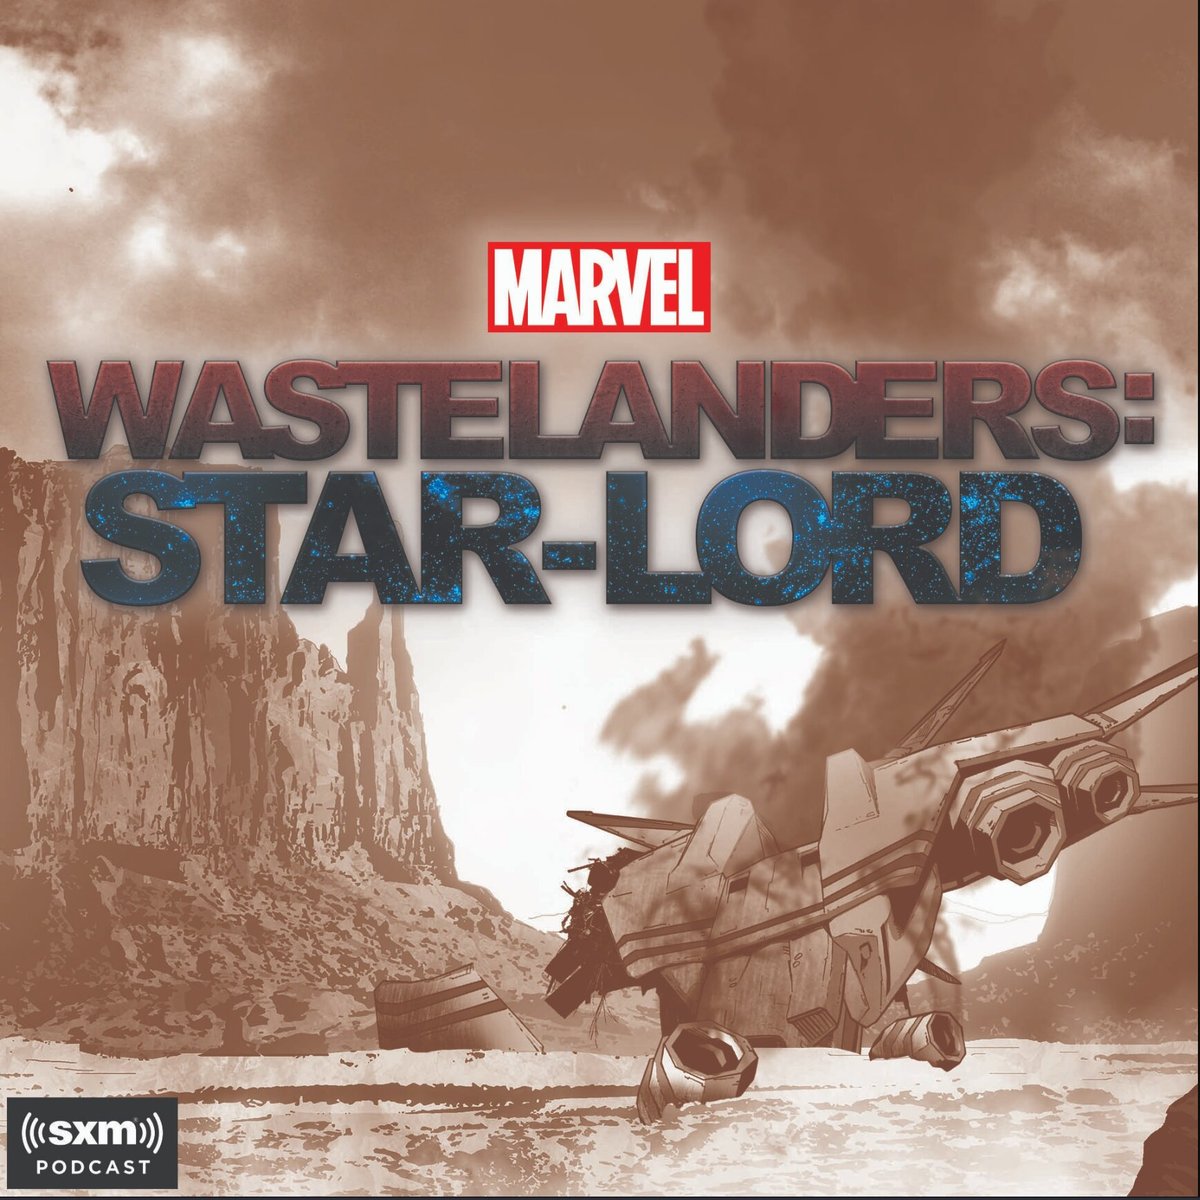 Wastelanders: Star-Lord art. A ship crash landing in sepia.